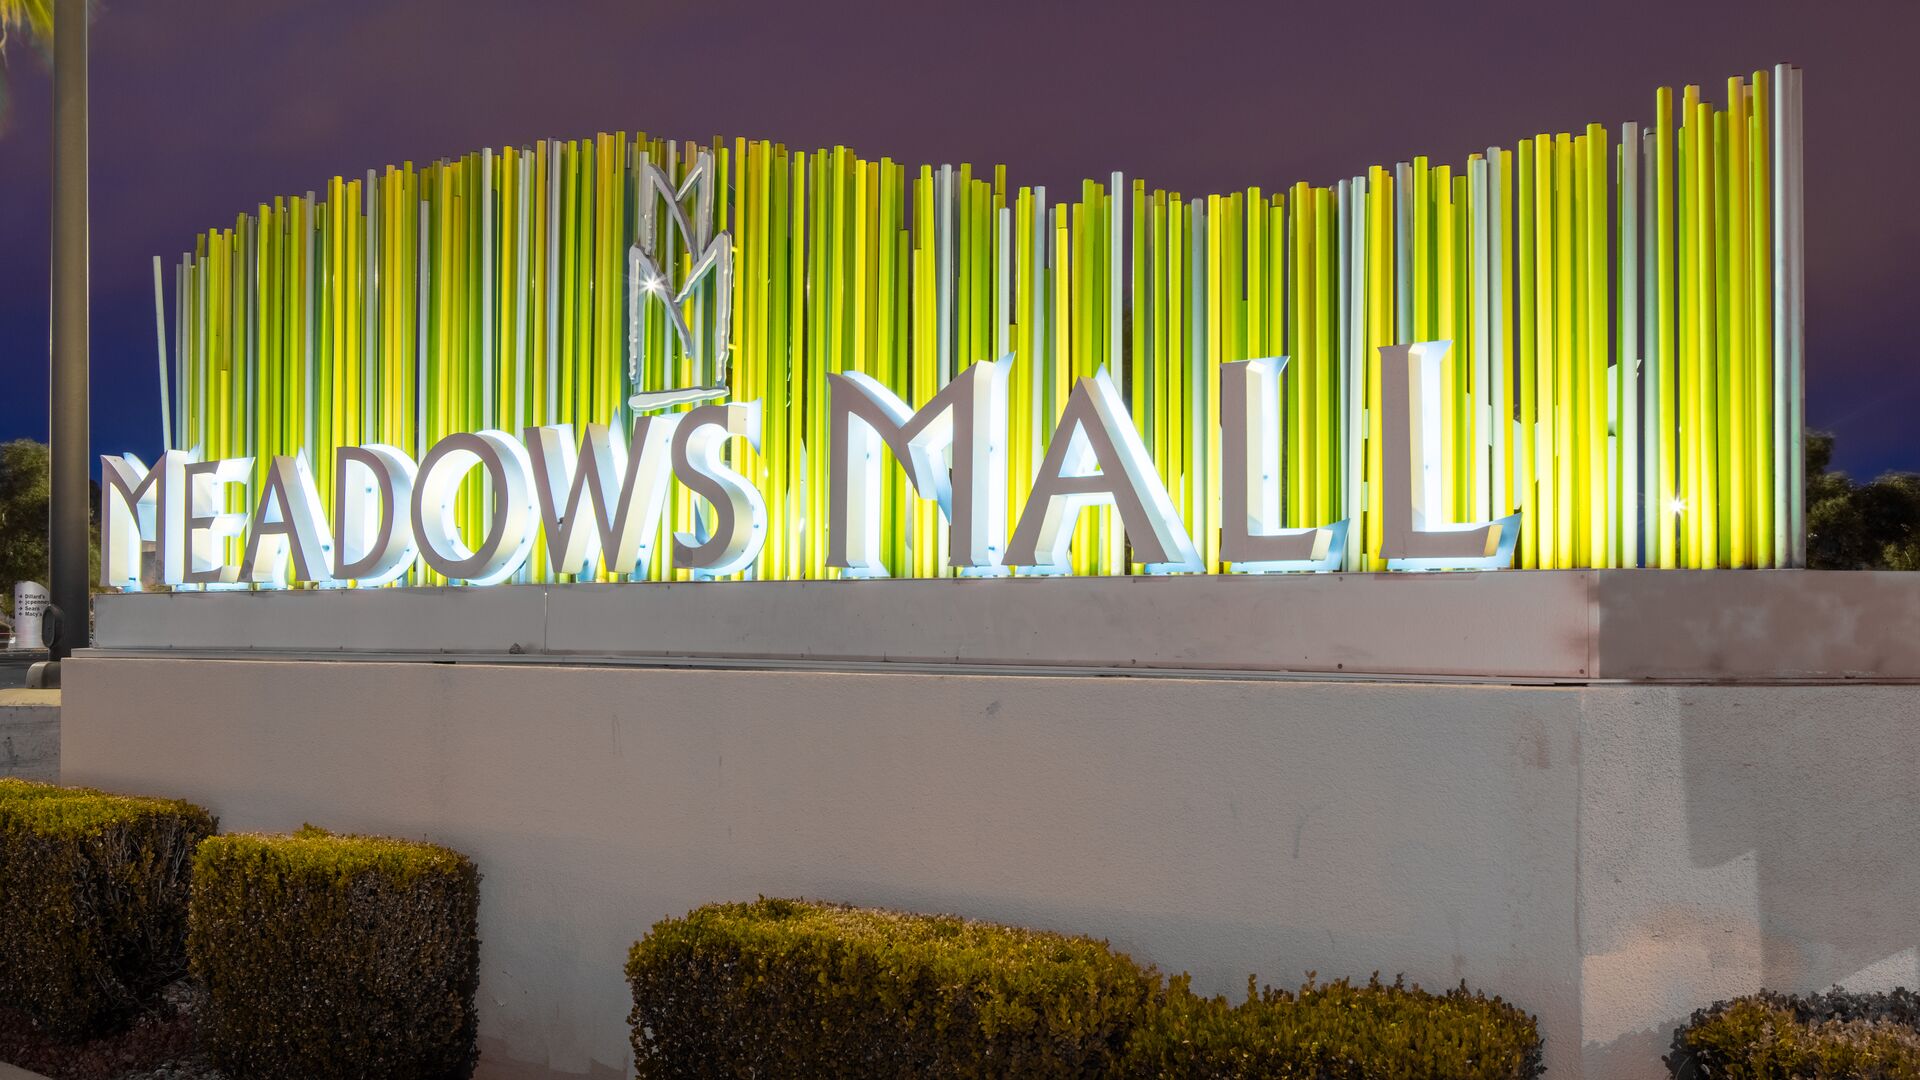 Meadows Mall outdoor sign.